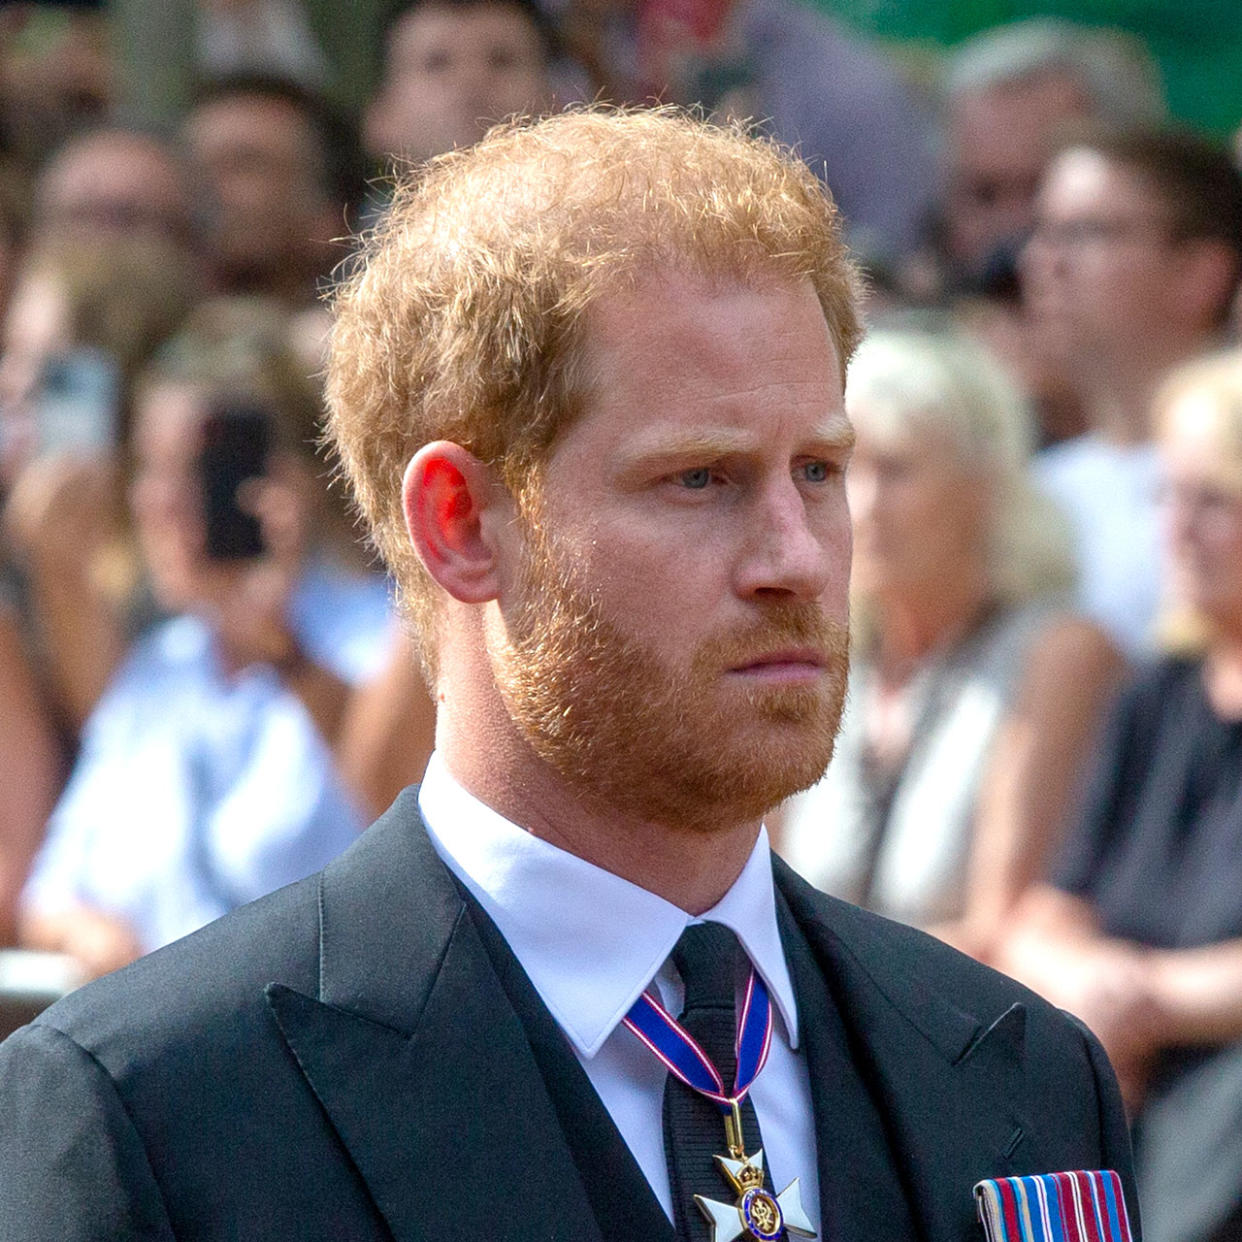 Prince Harry follows Queen Elizabeth II's coffin